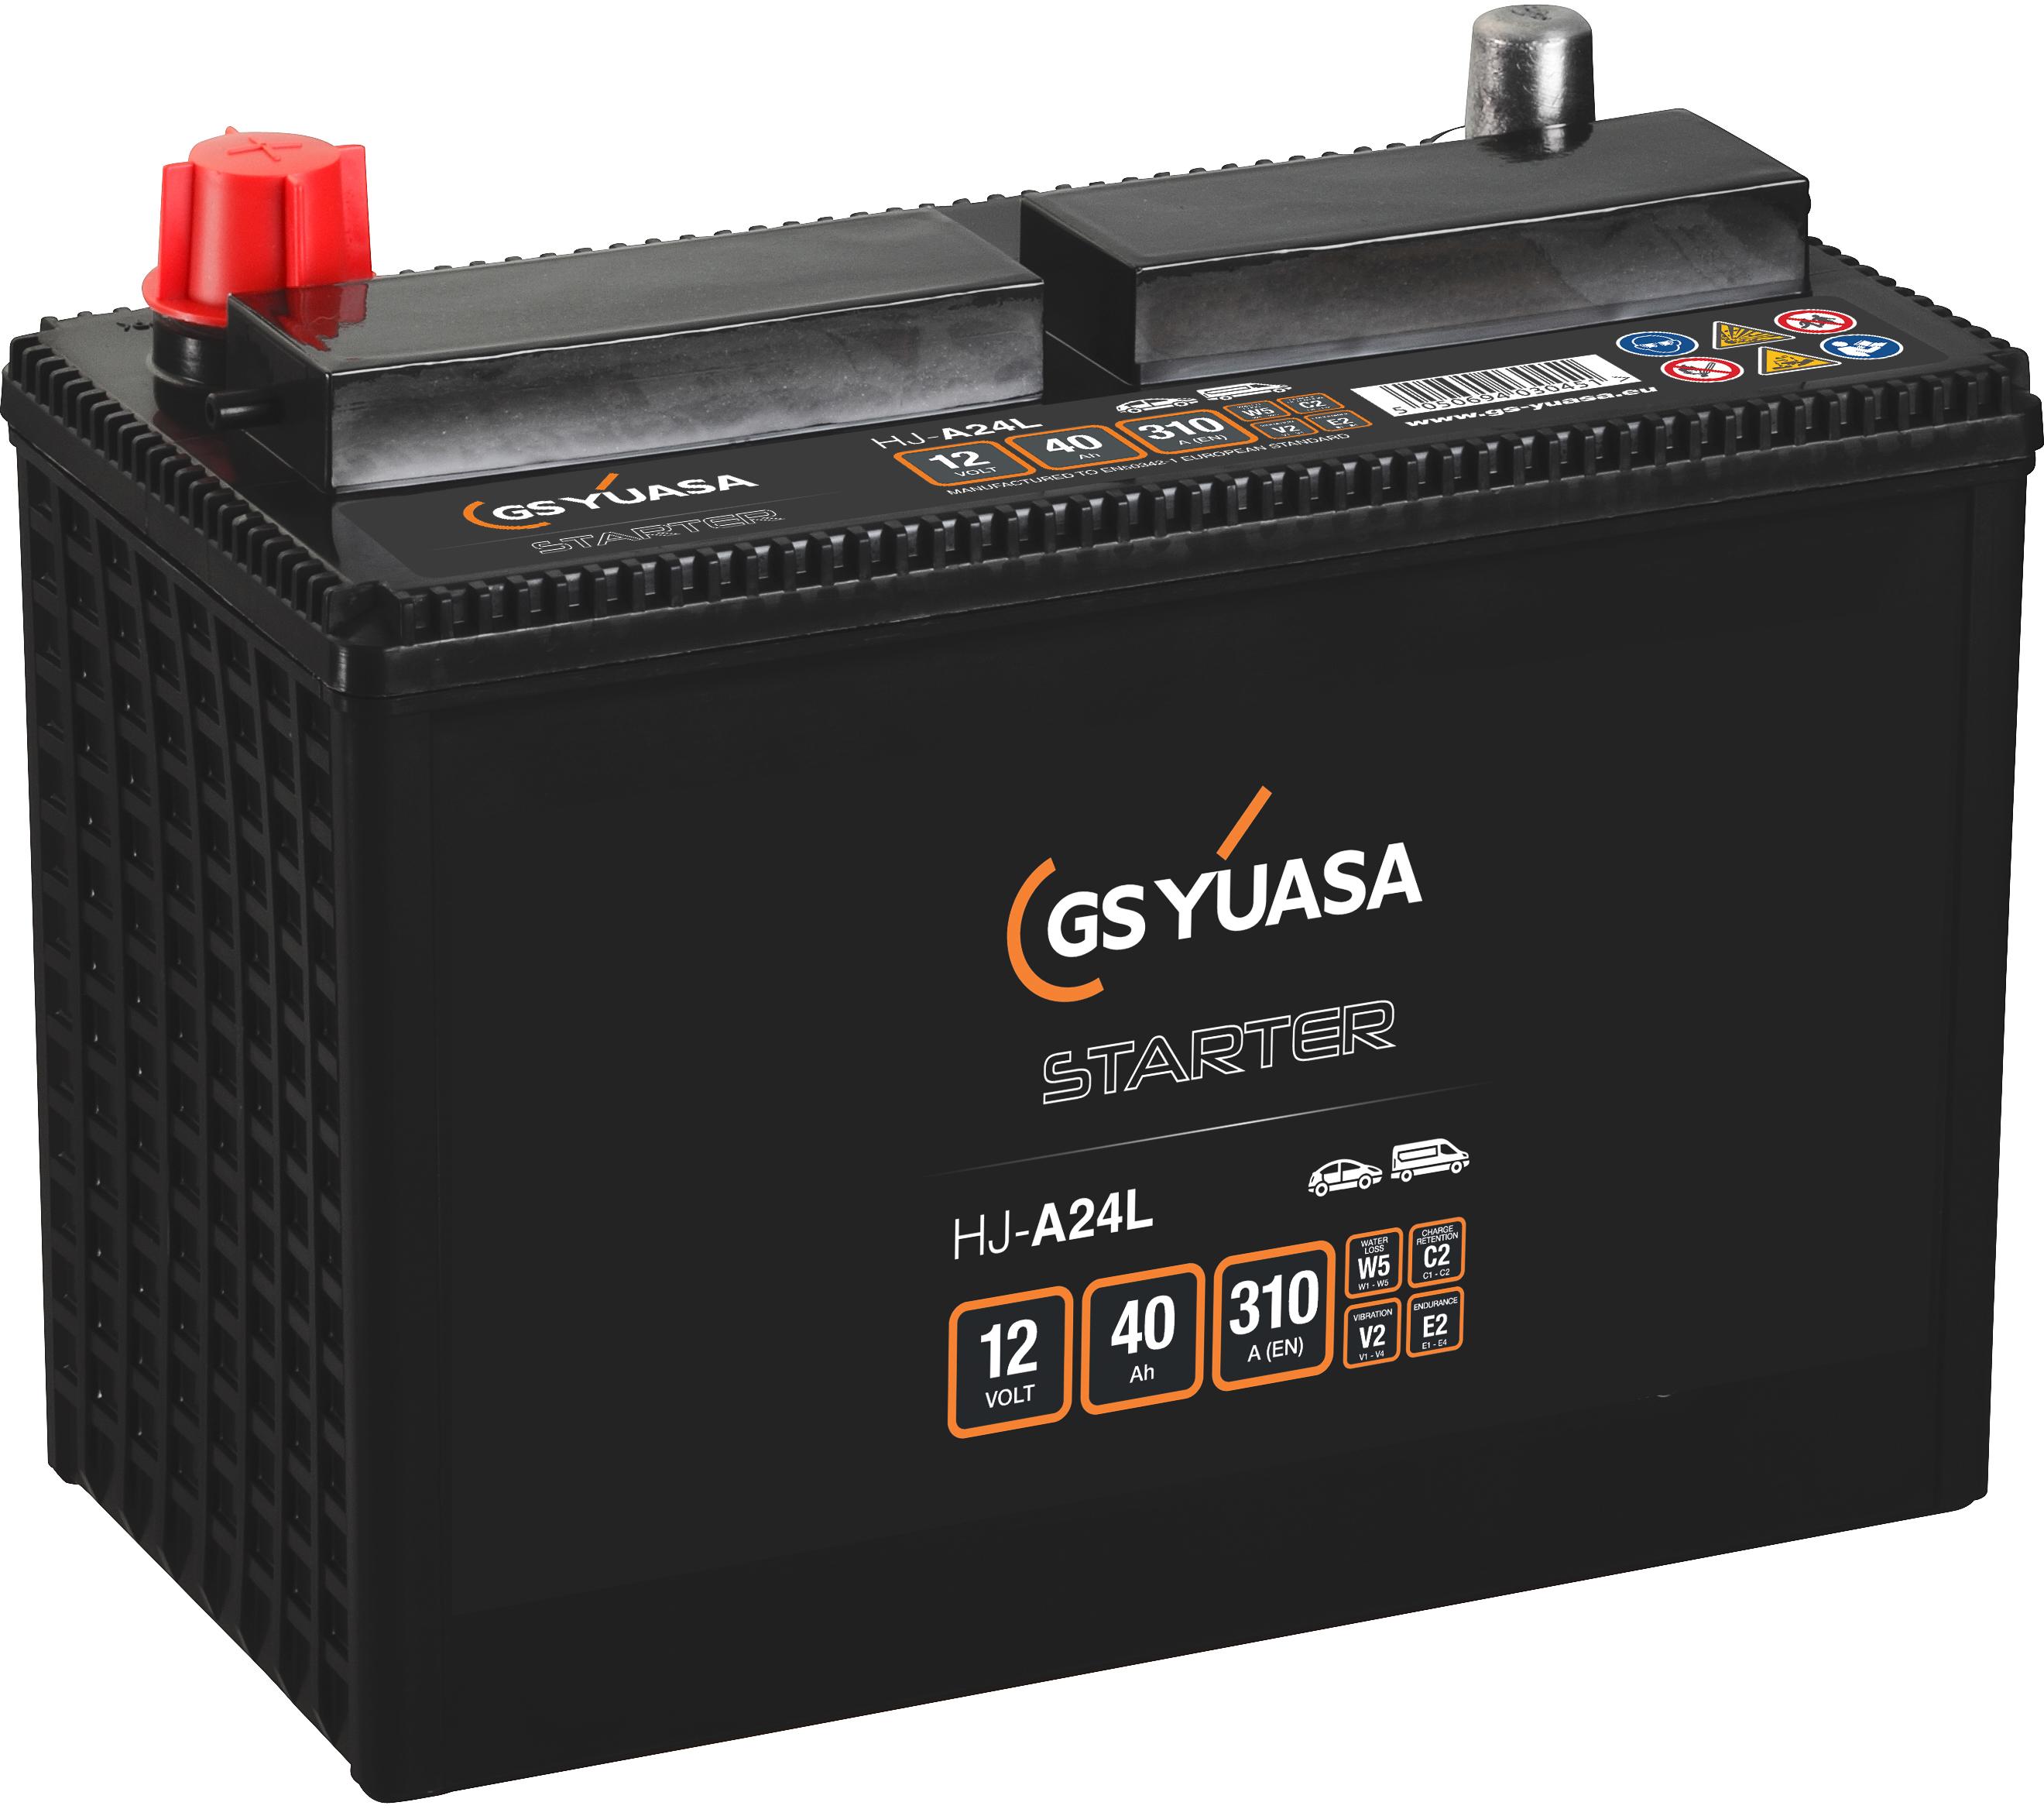 Hj-A24L Gs Yuasa Mazda Mx5 Agm Starter Battery